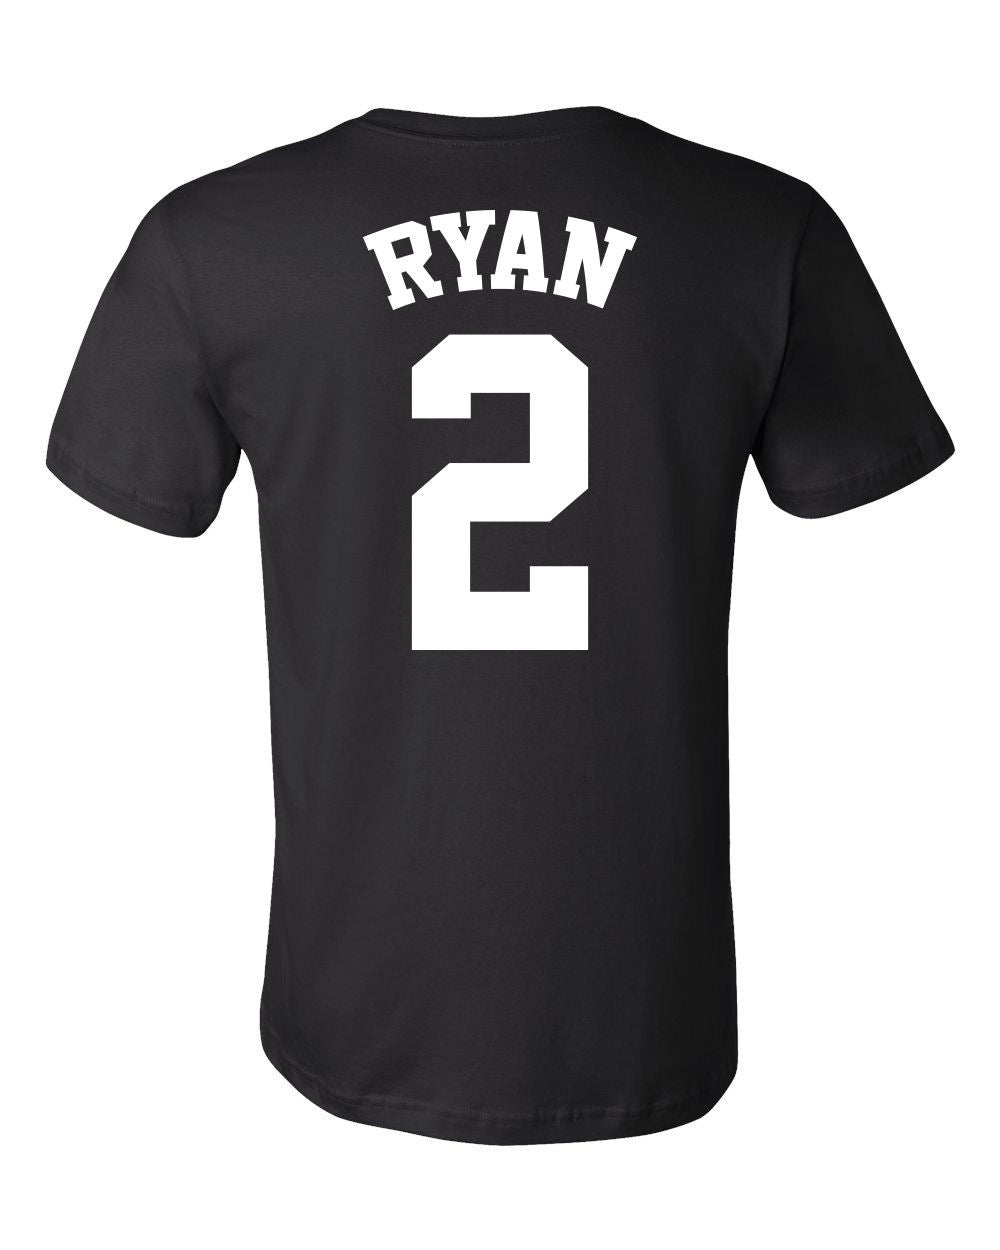 Matt Ryan jersey merchandise